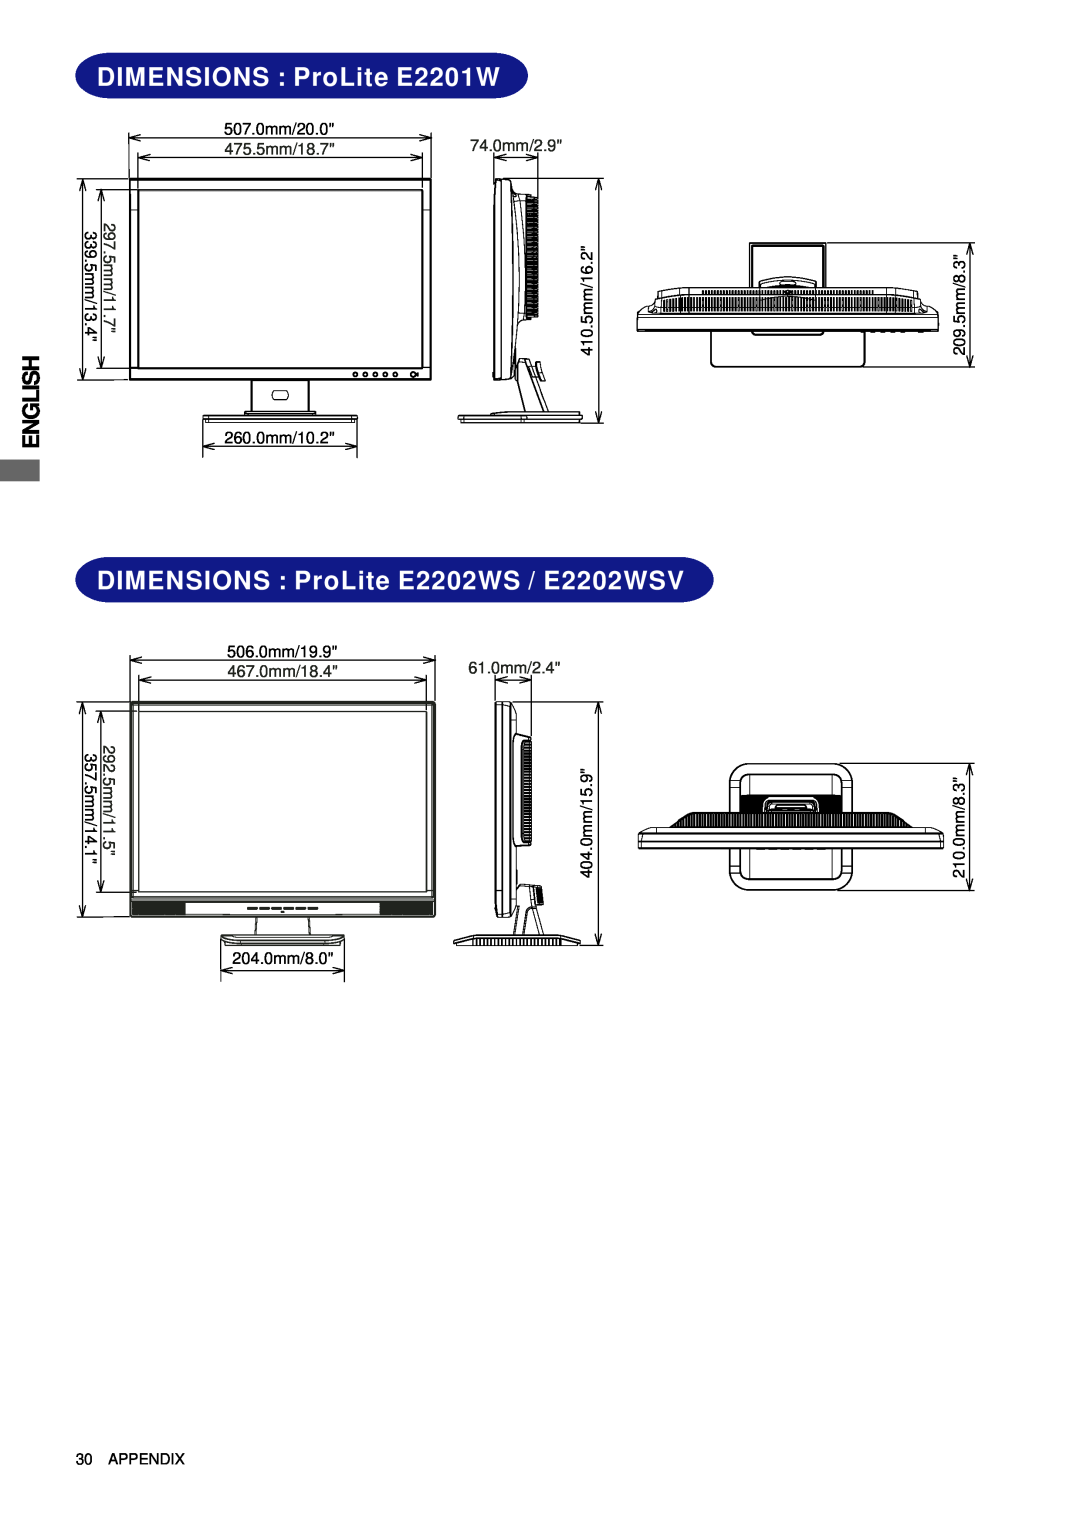 Iiyama DIMENSIONS ProLite E2201W, DIMENSIONS ProLite E2202WS / E2202WSV, English, 507.0mm/20.0, 74.0mm/2.9, 61.0mm/2.4 